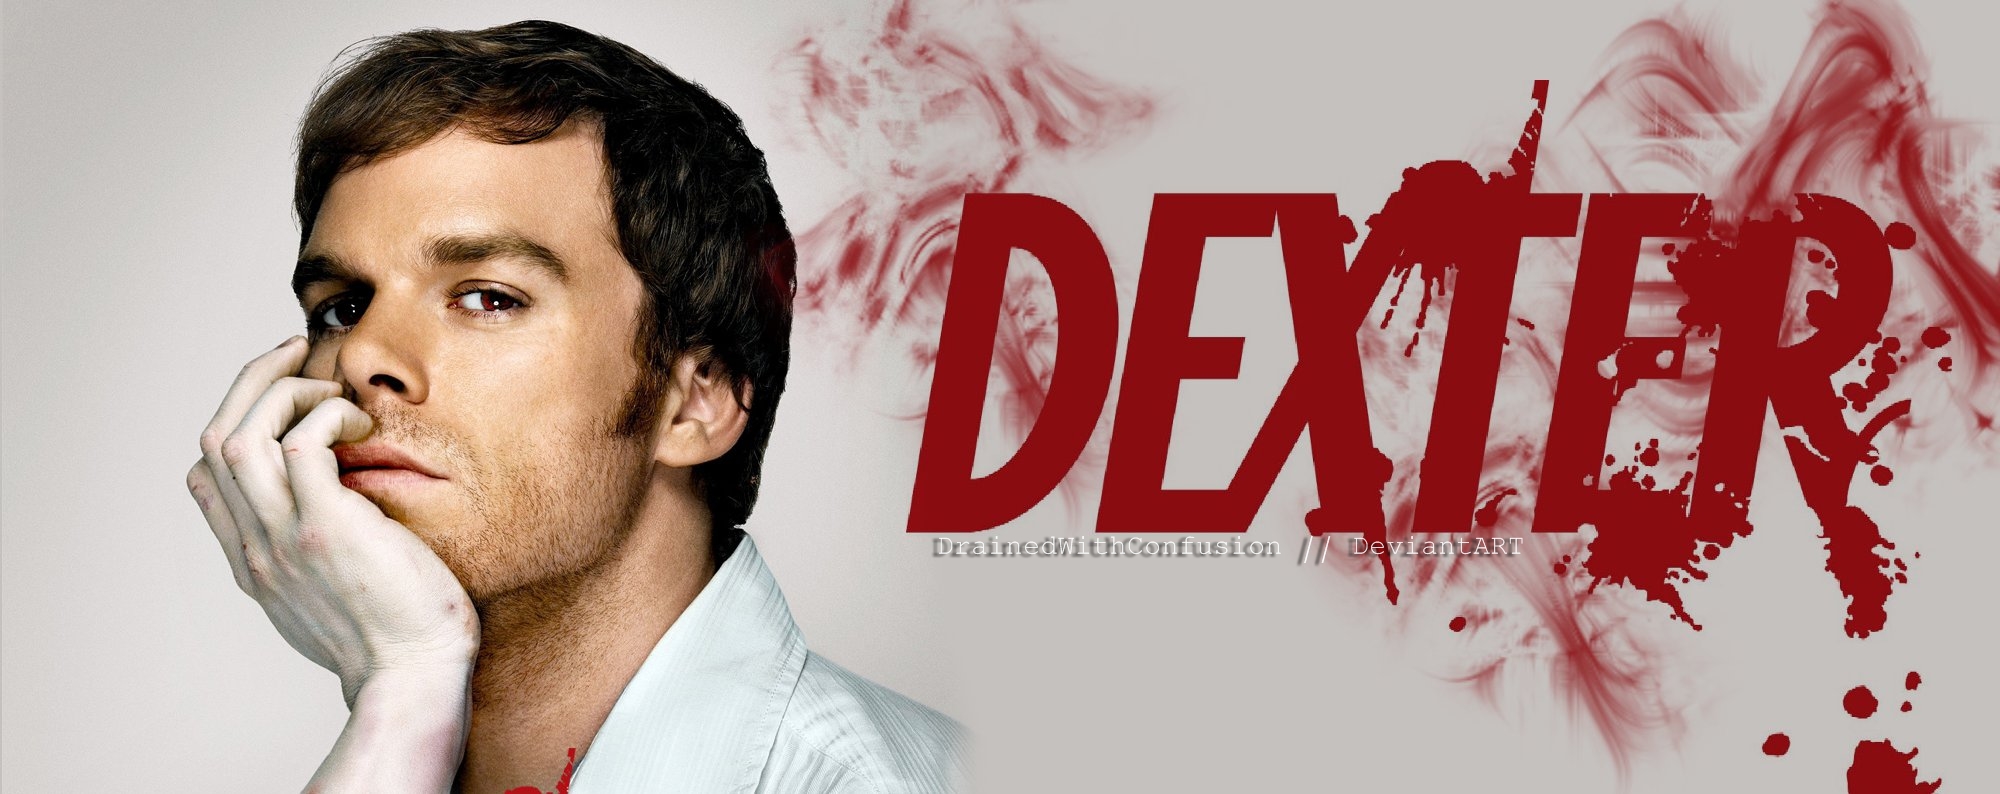 TVsubtitlesnet - Download subtitles for Dexter season 7